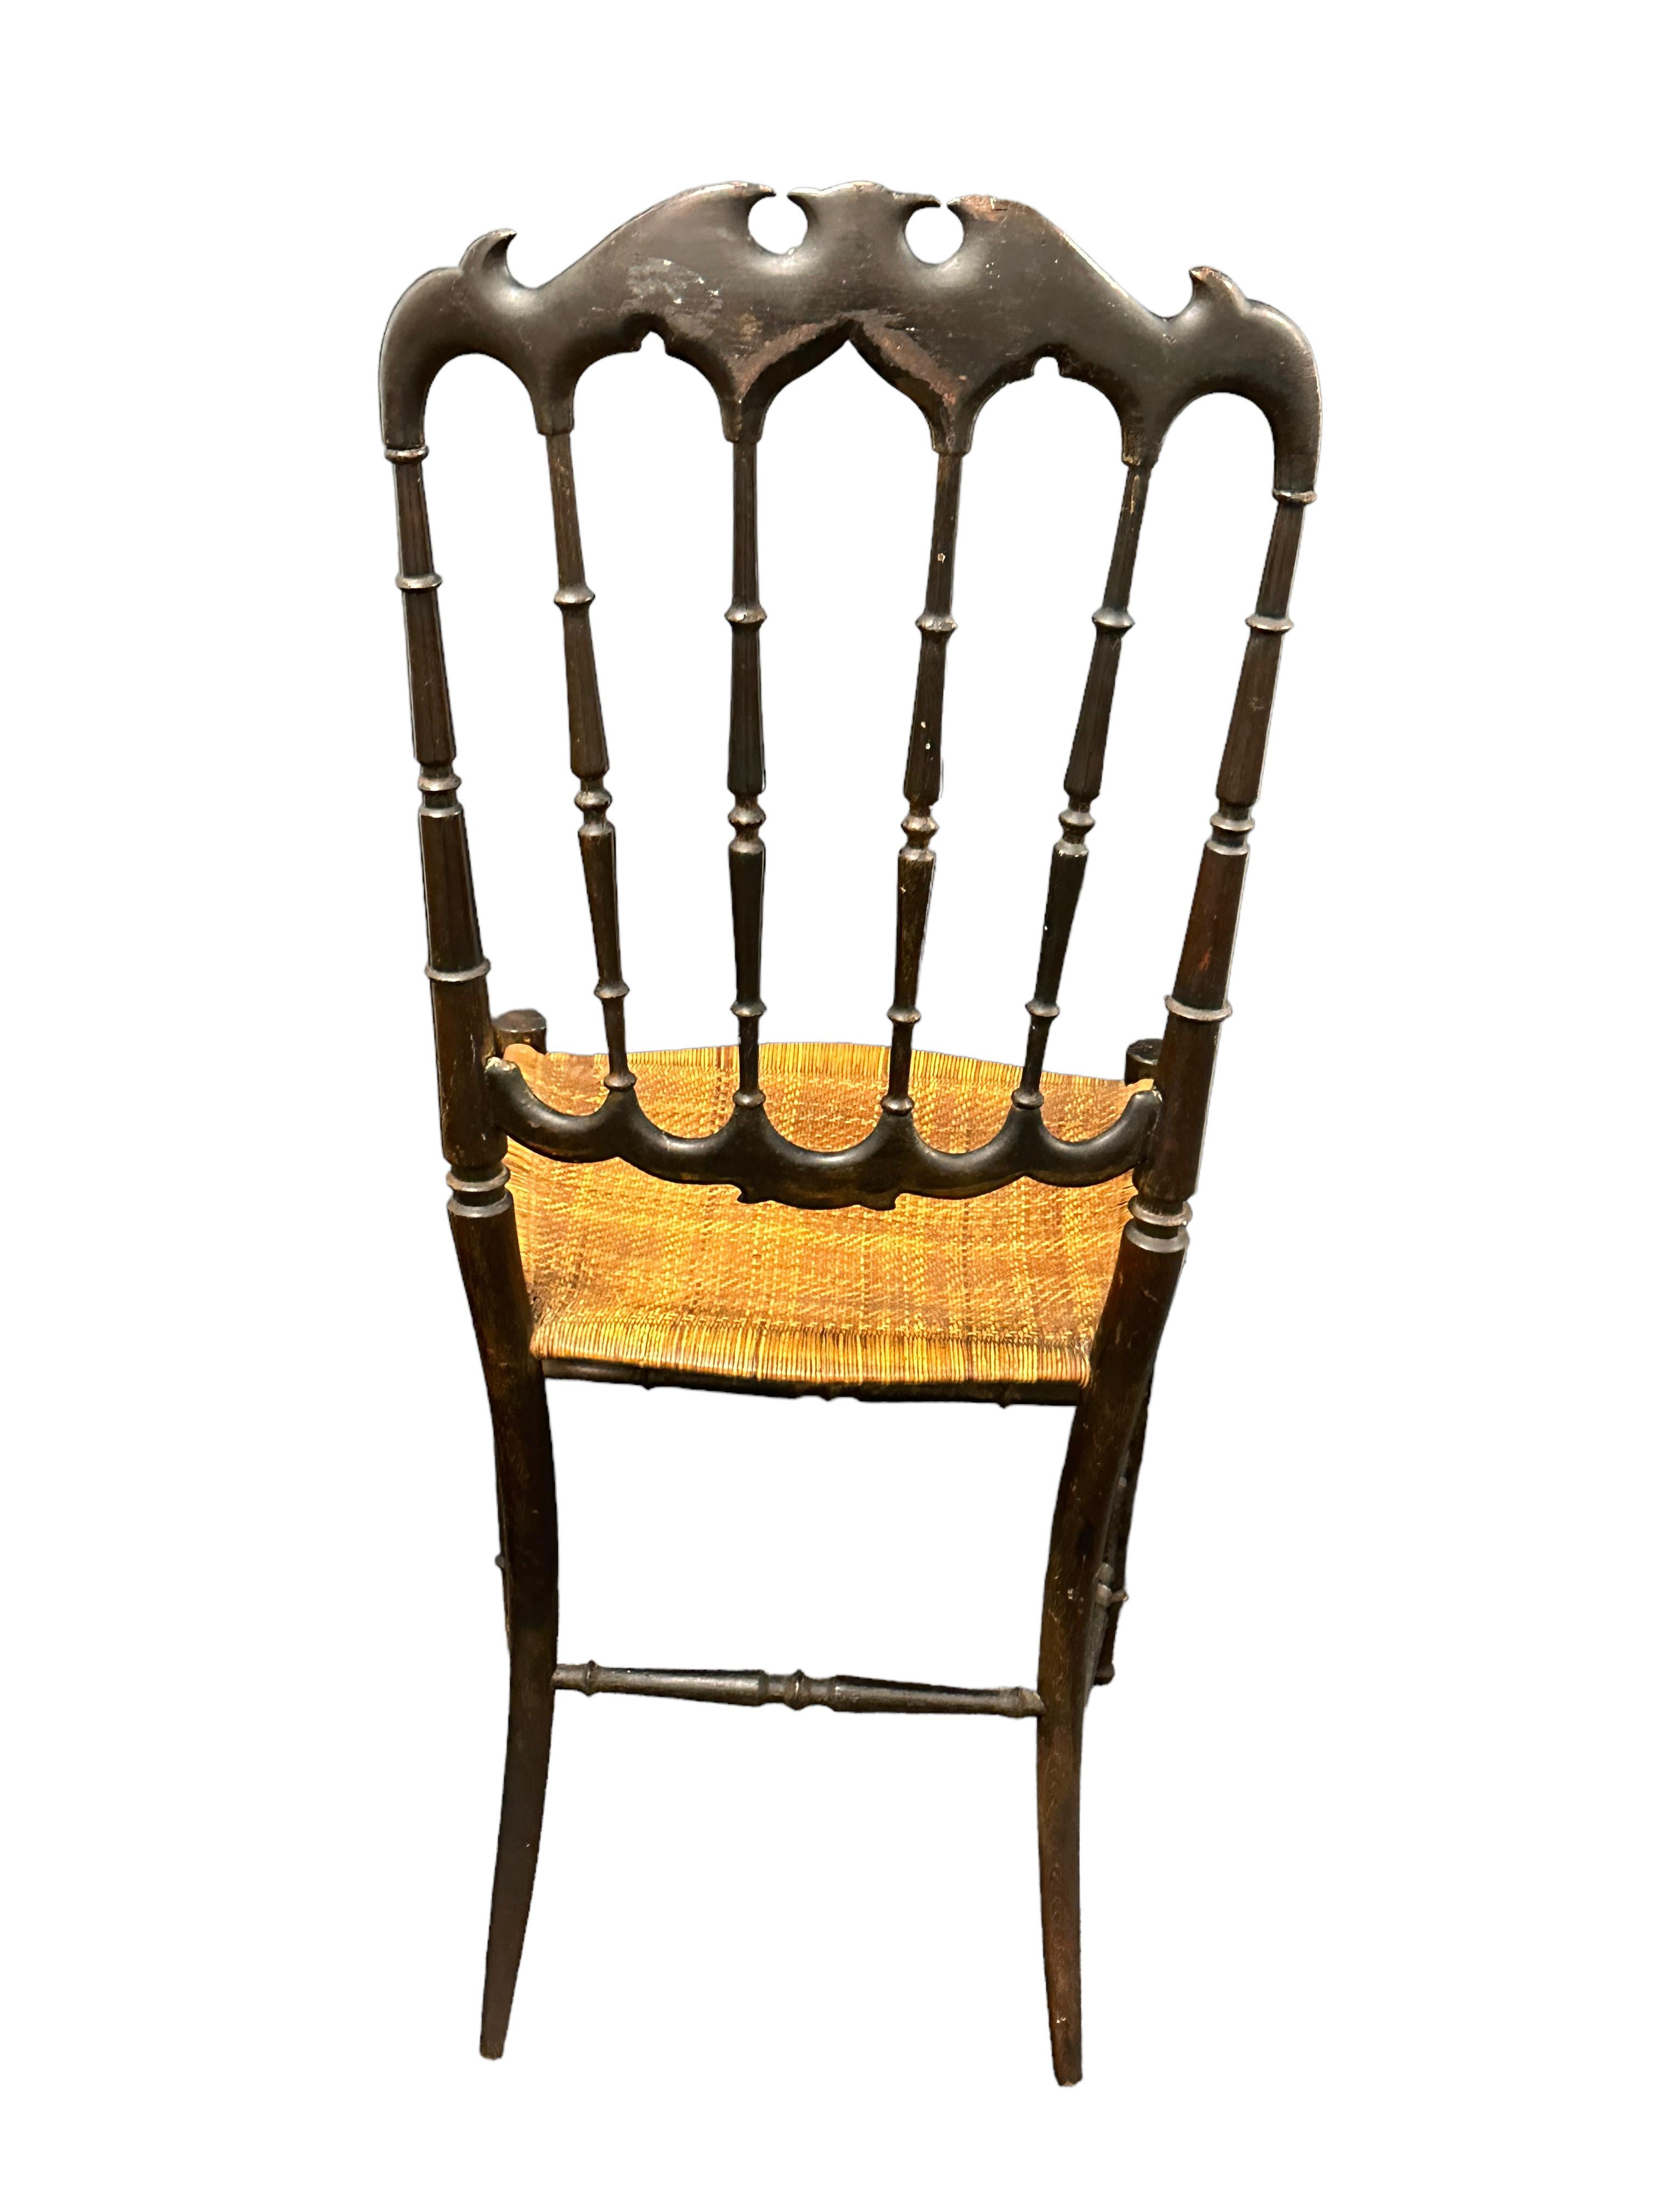 Italian Beautiful Chiavari Wooden Chair Wicker Seat, Made in Liguria, Italy, 1930s For Sale